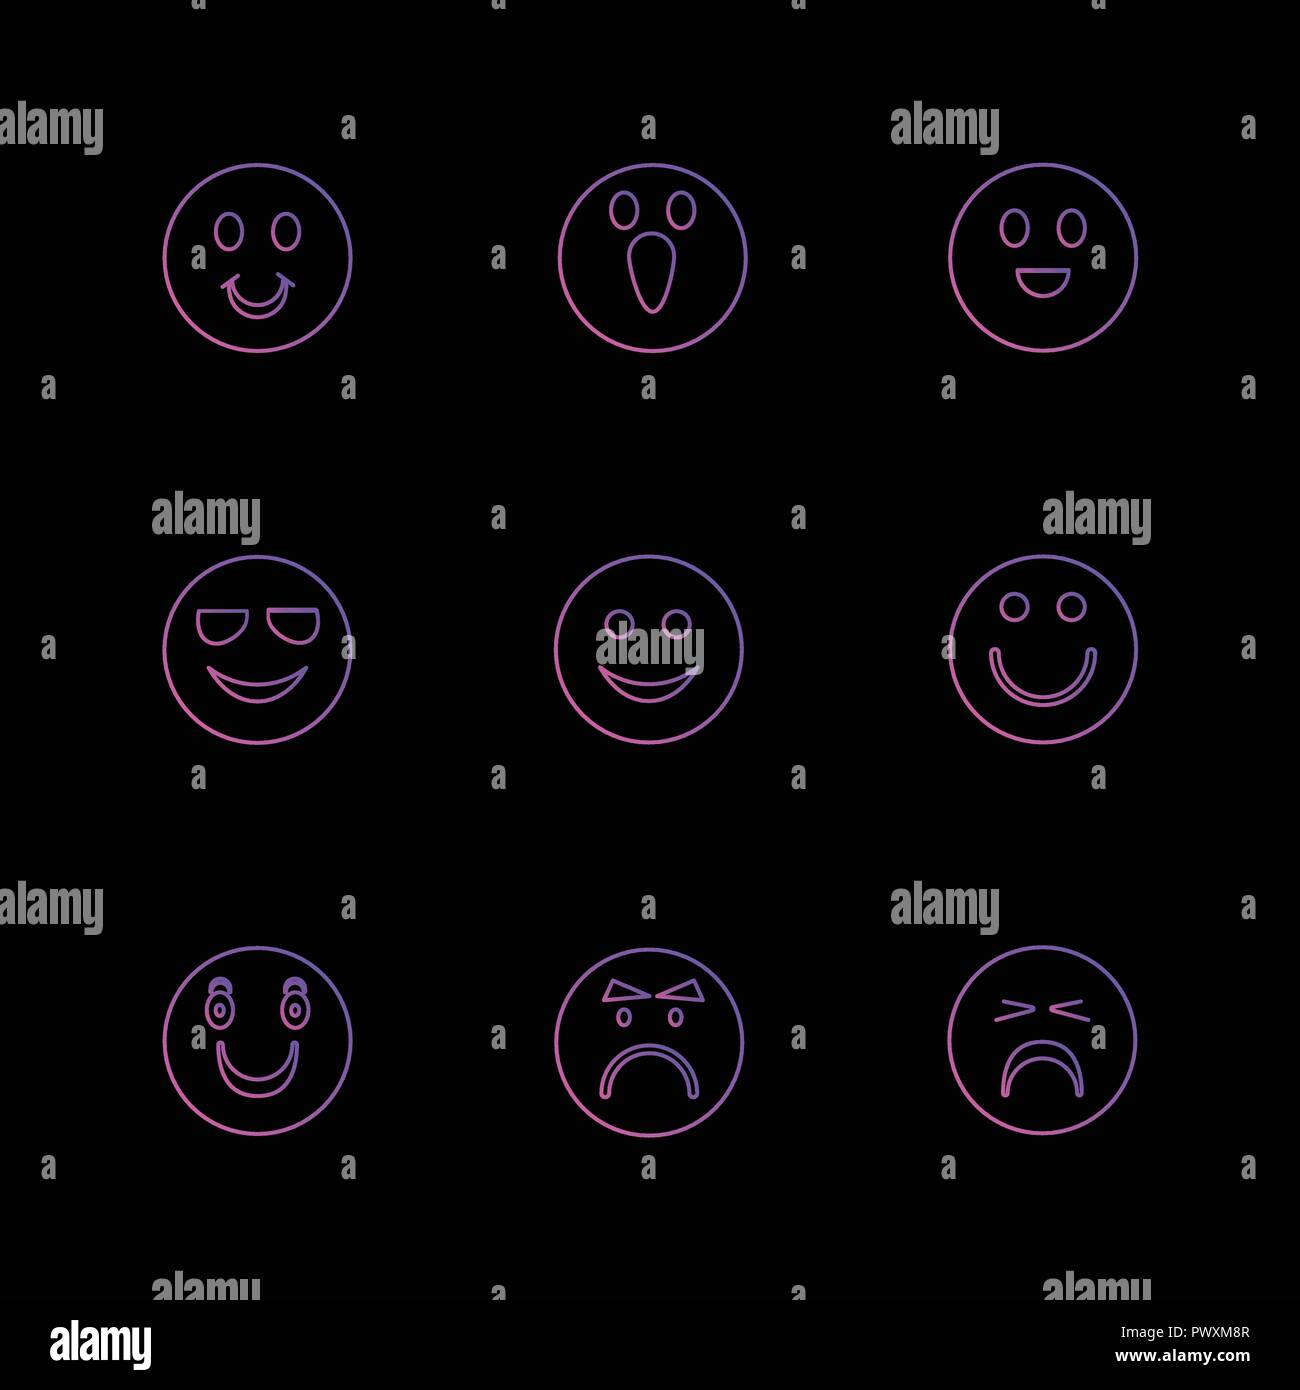 Idees De Fait Main Emoji Coeur Brise